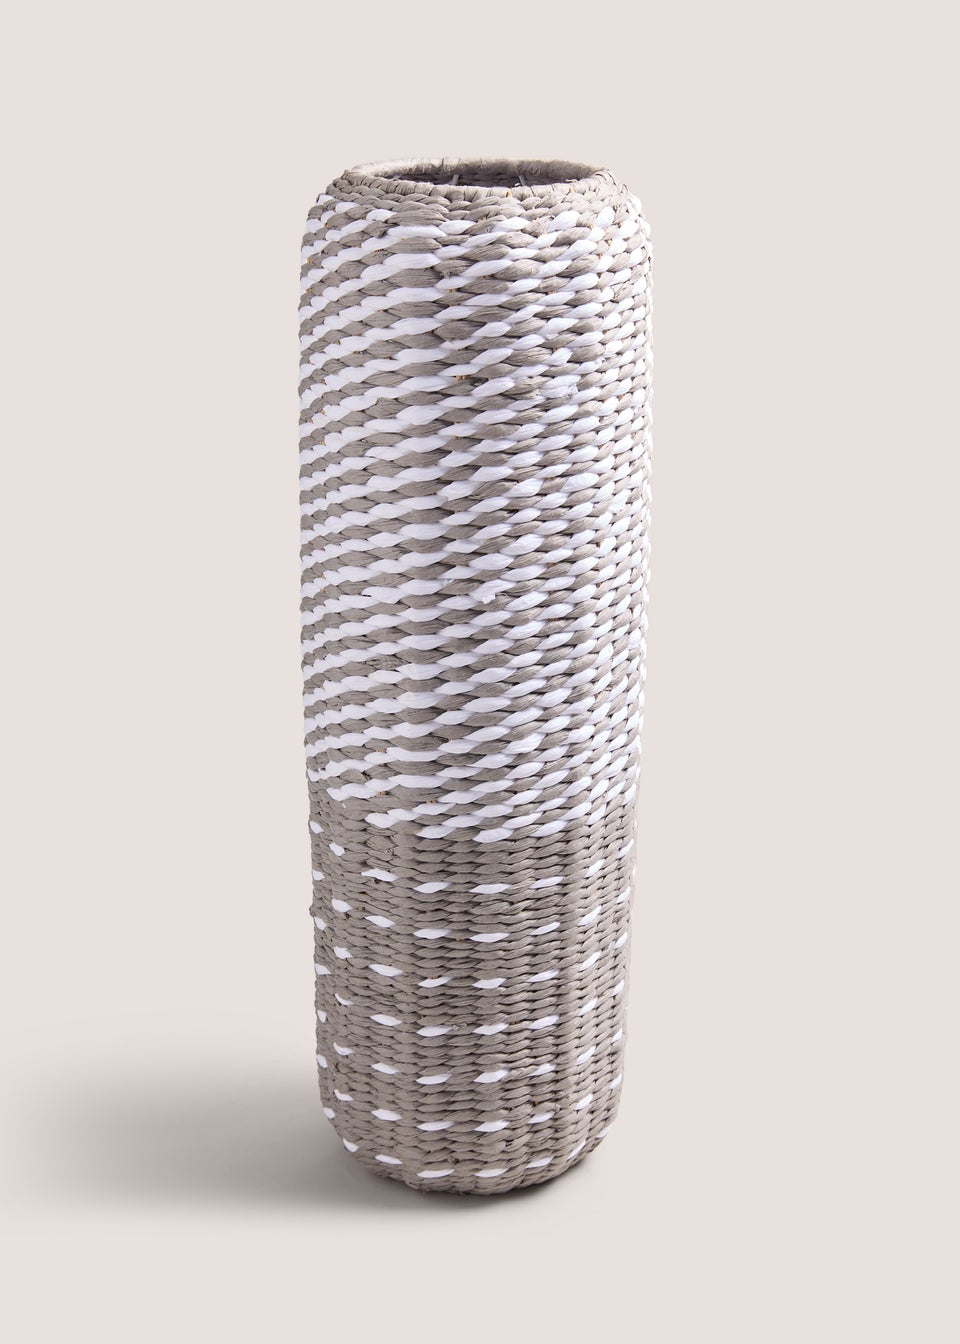 Grey & White Woven Vase (60cm x 13cm x 13cm)